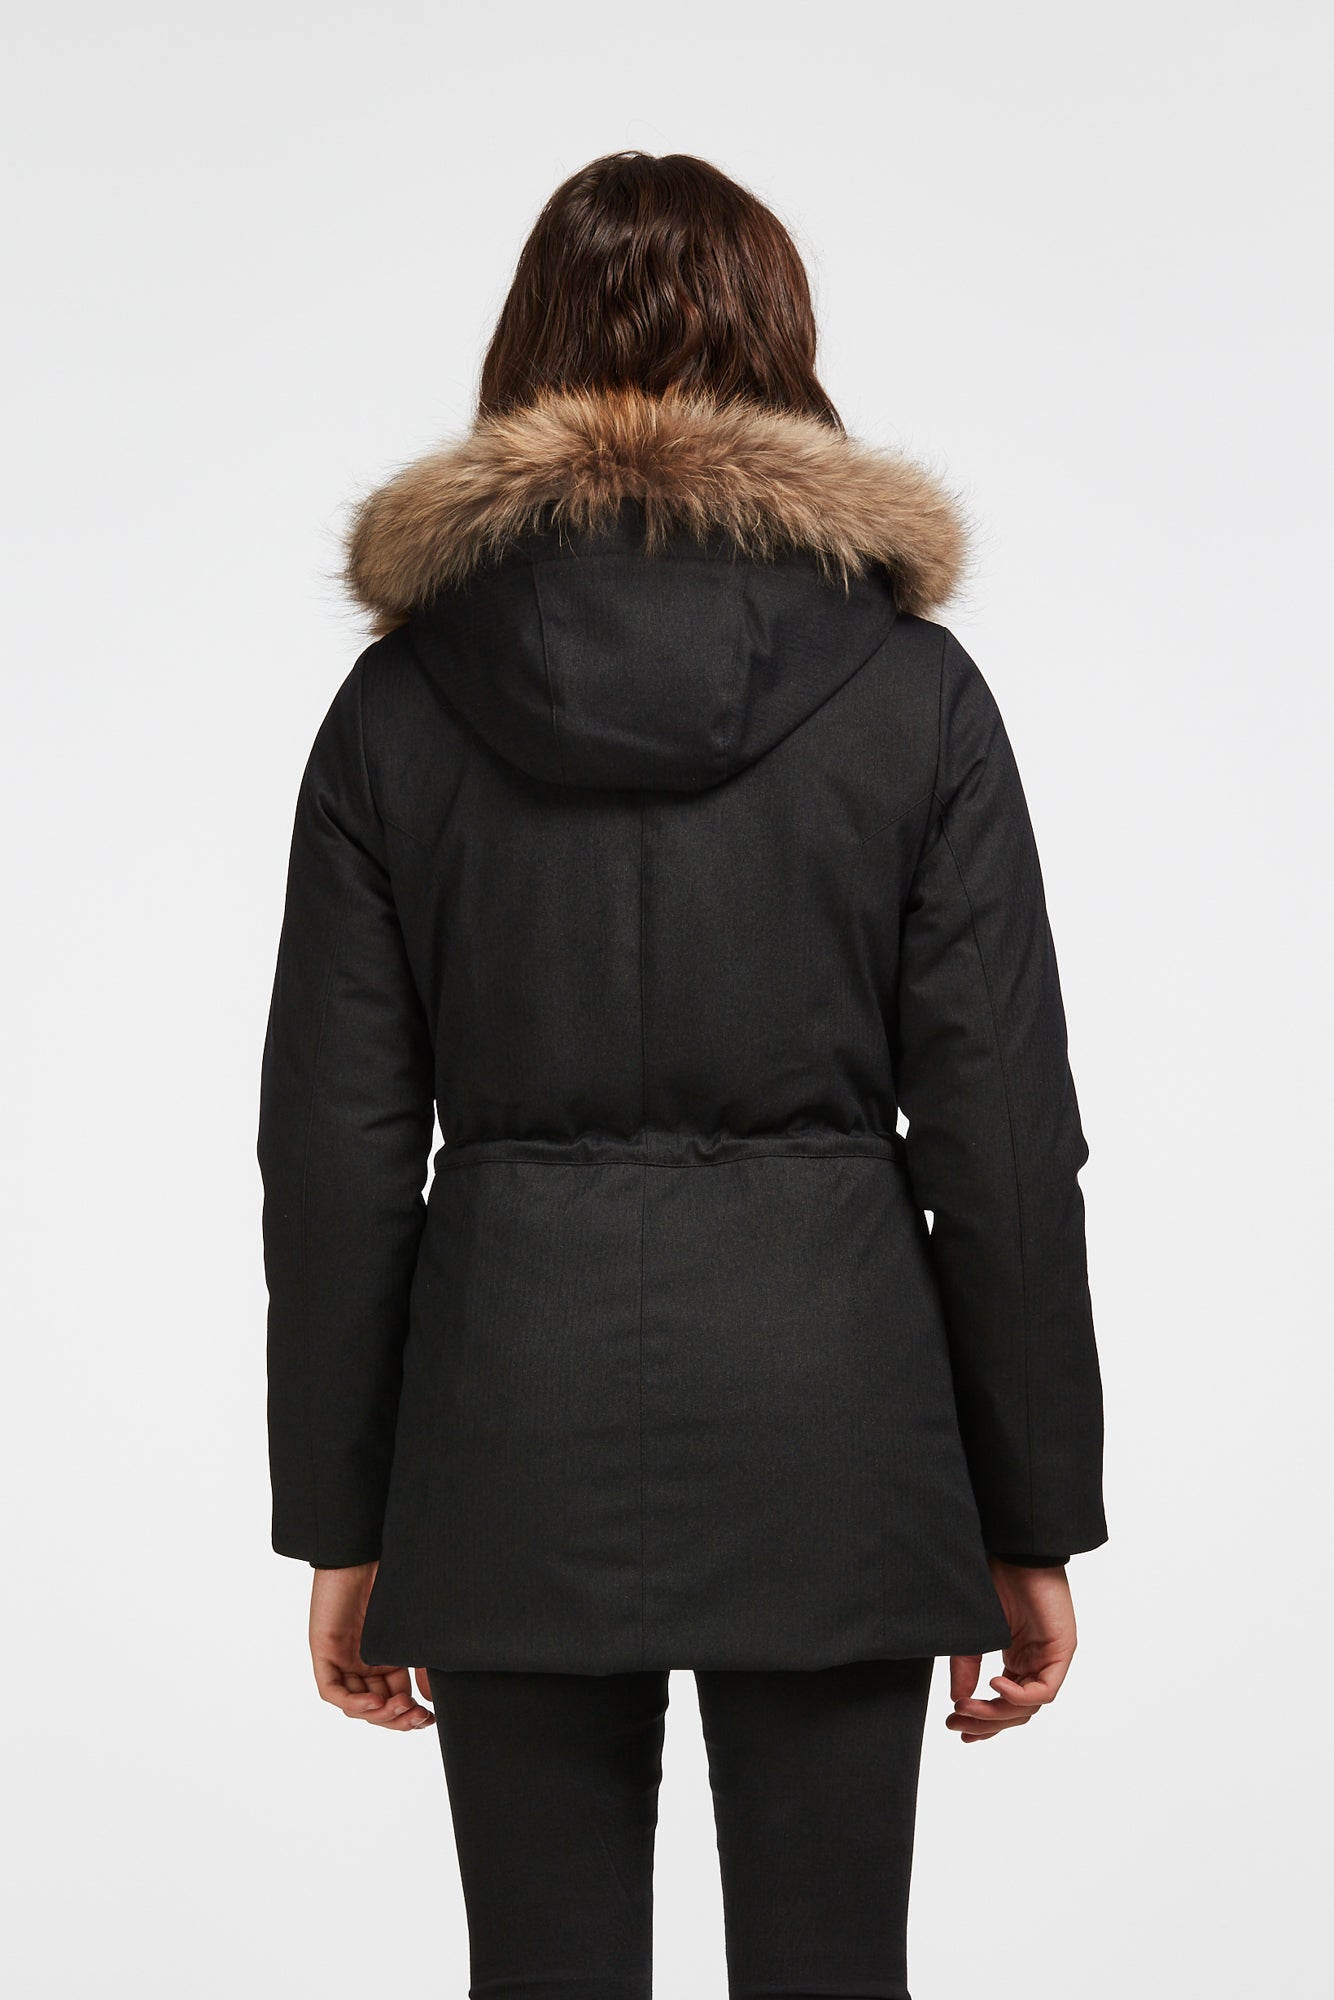 Women’s Long Winter Coats | Long Parkas for Women | Audvik